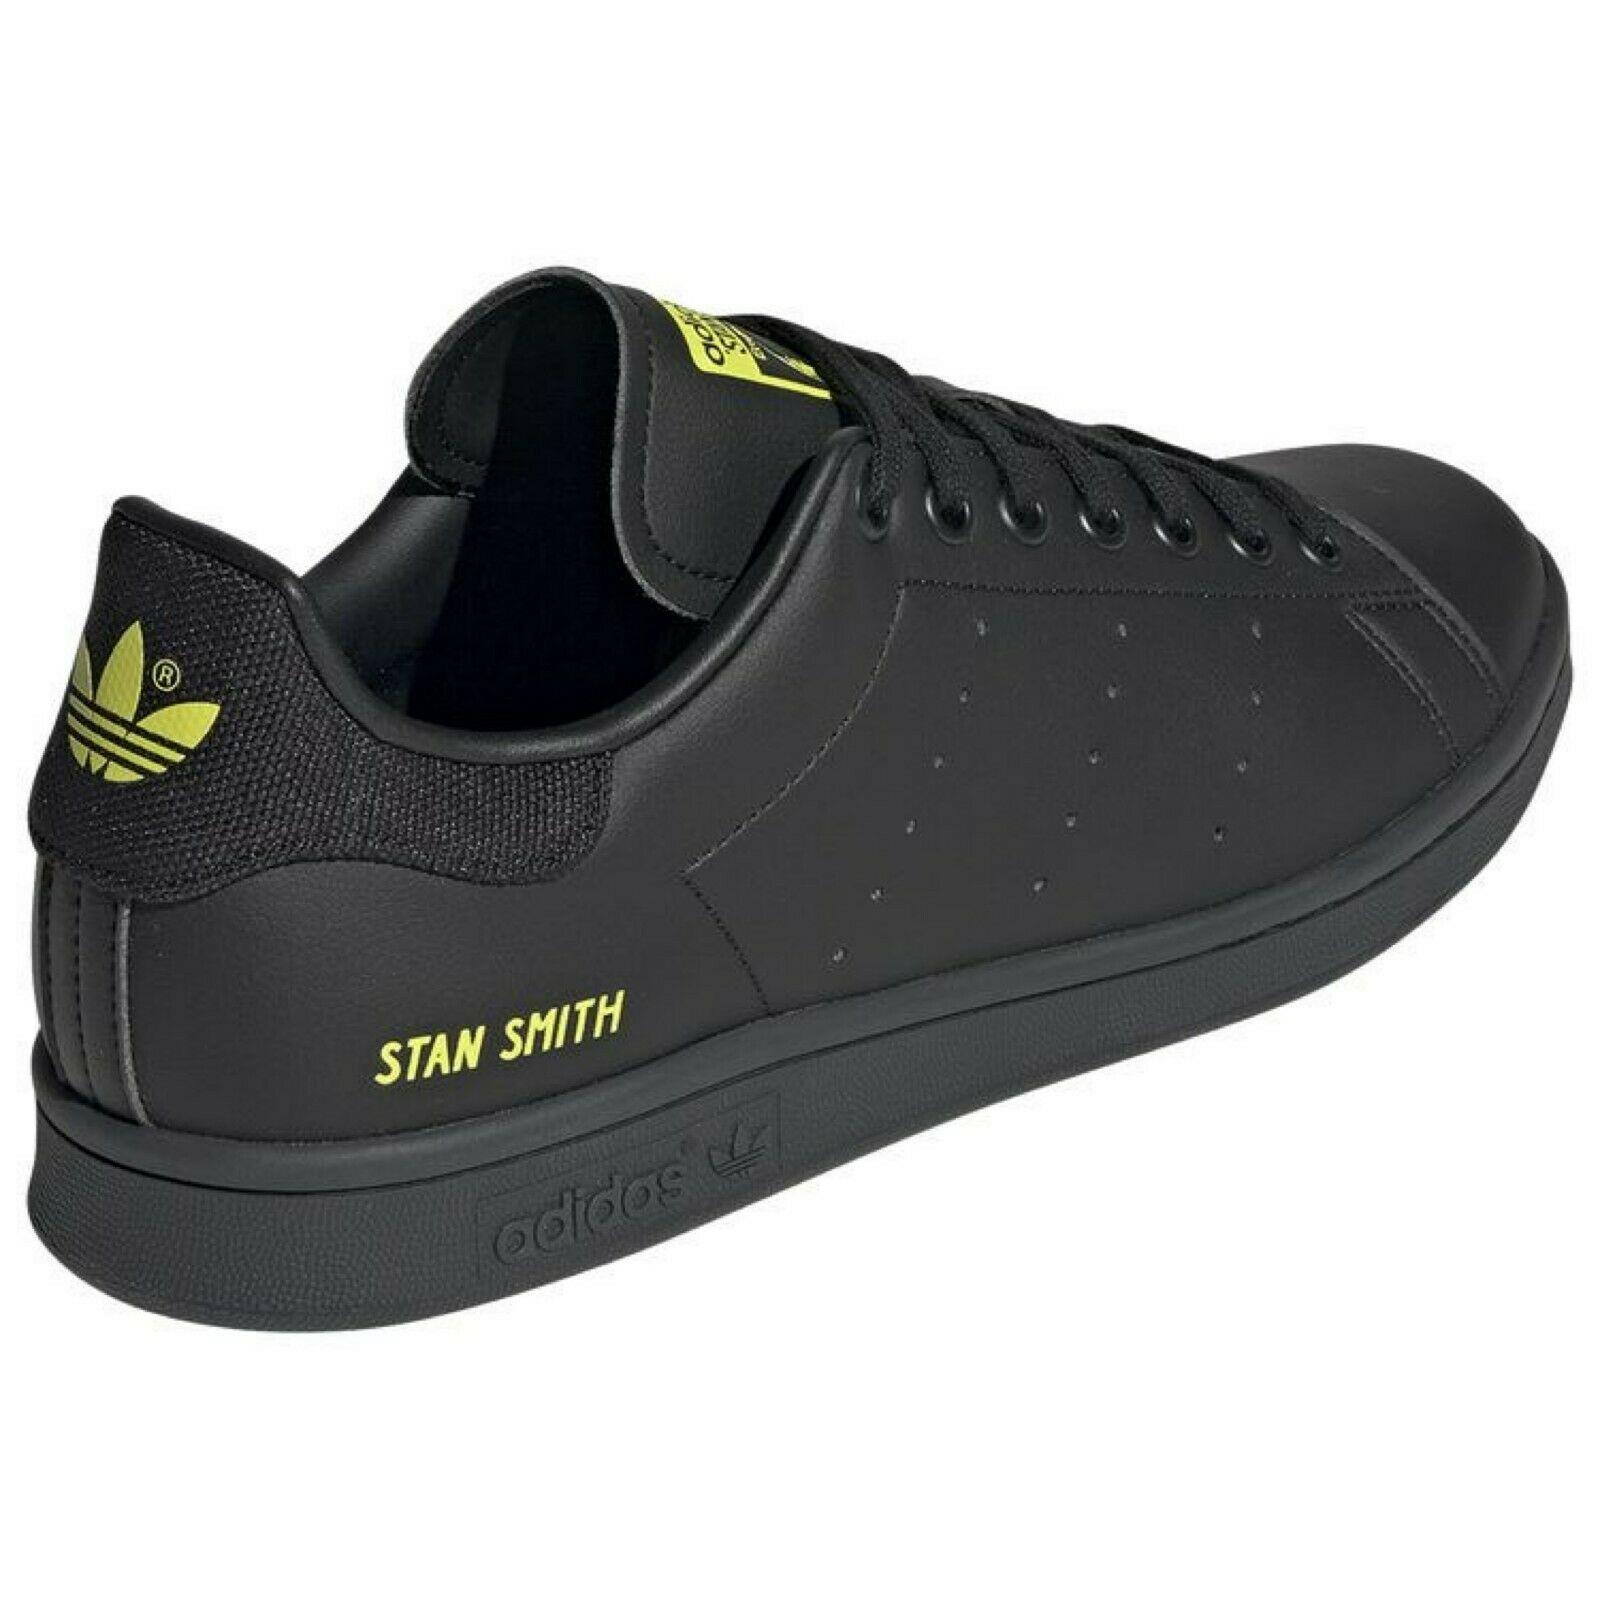 Adidas shoes Originals Stan Smith - Black , Black/Volt Manufacturer 1